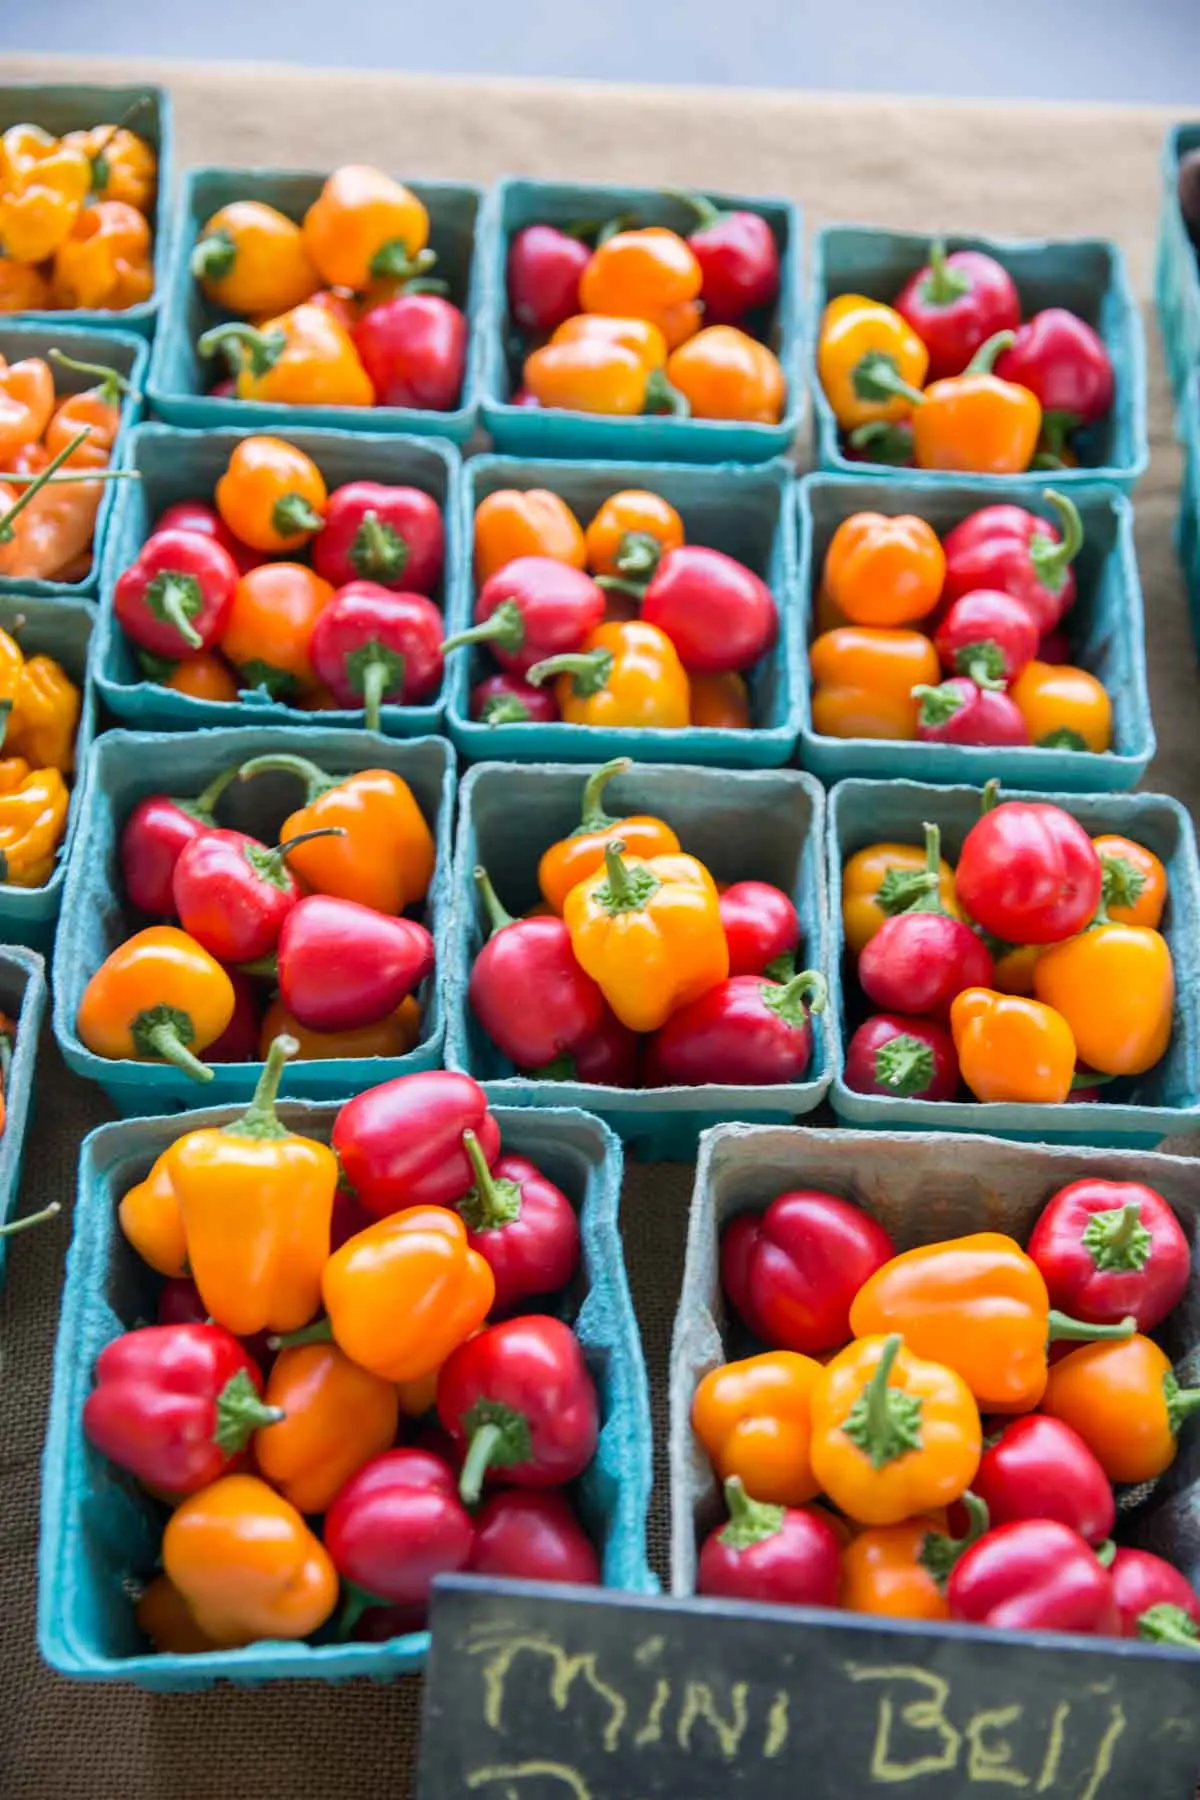 Durham Farmers Market bell peppers